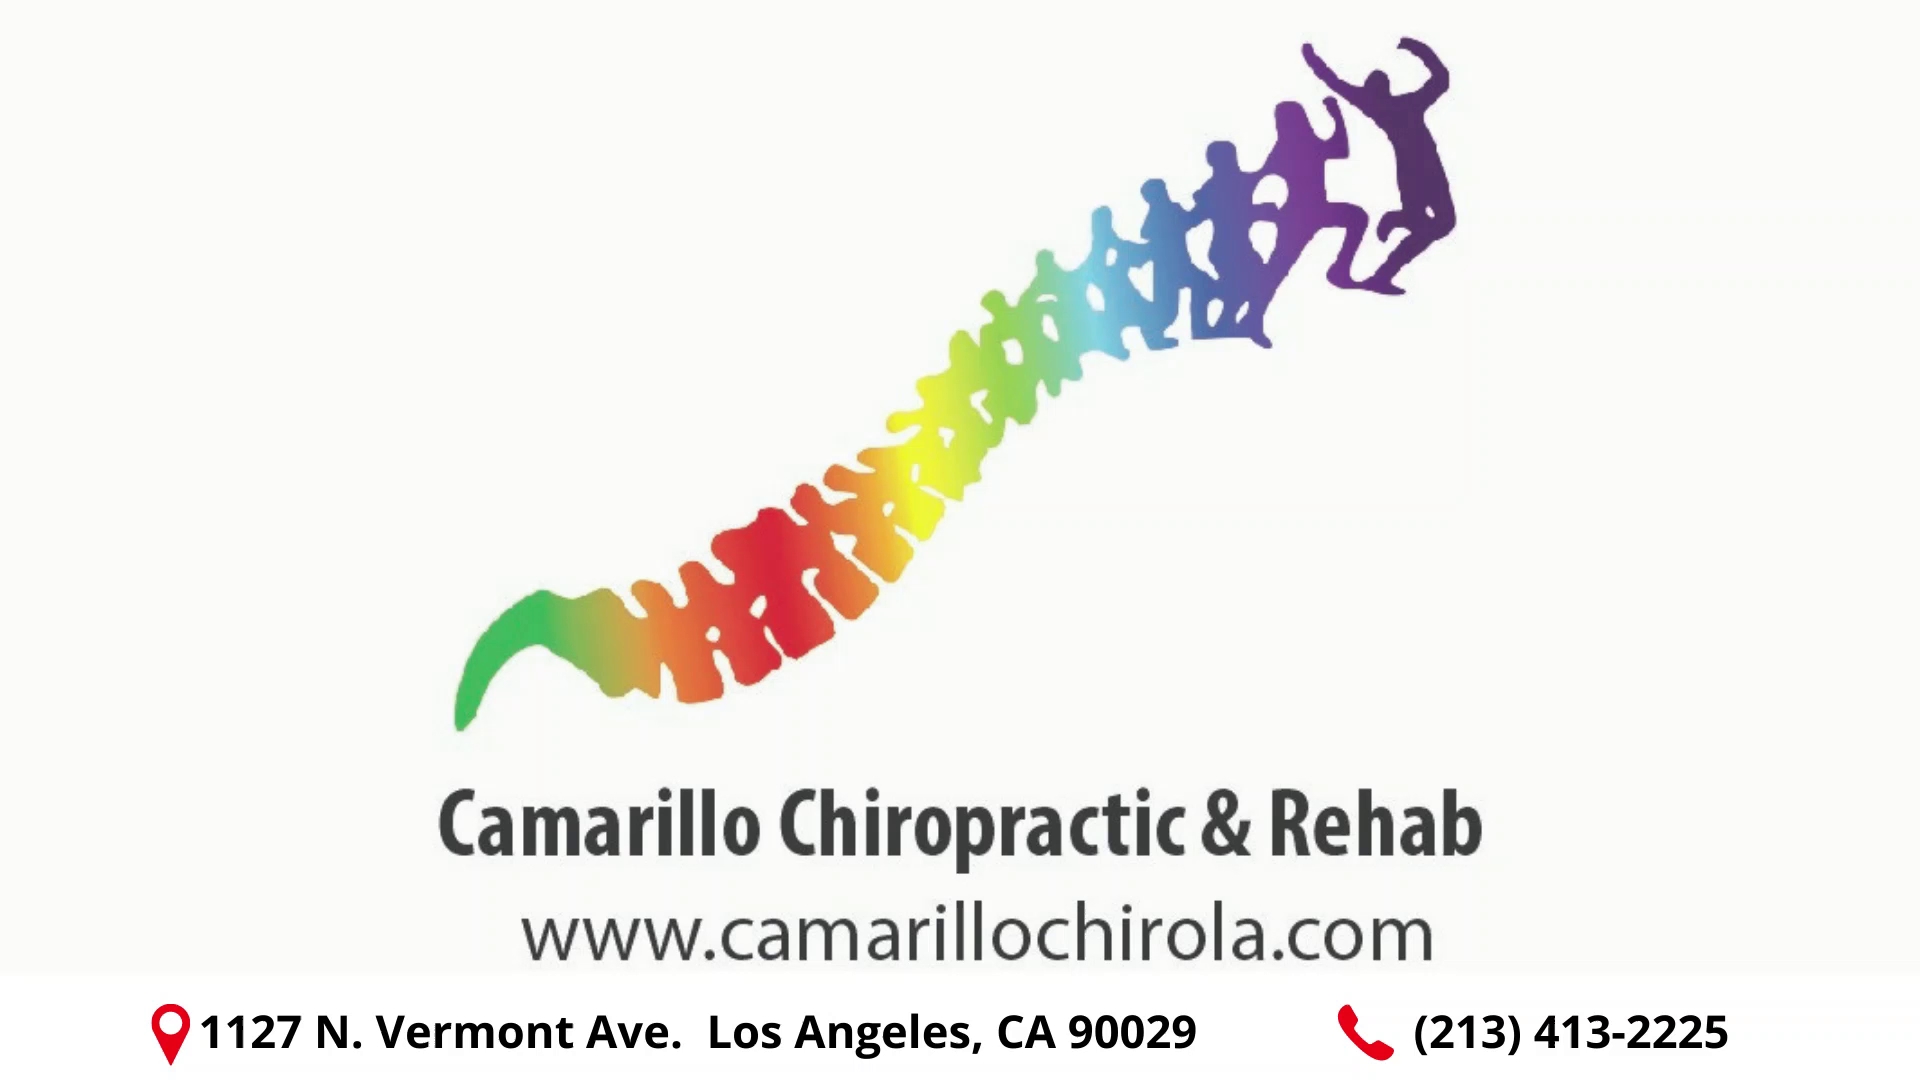 Camarillo Chiropractic & Rehab